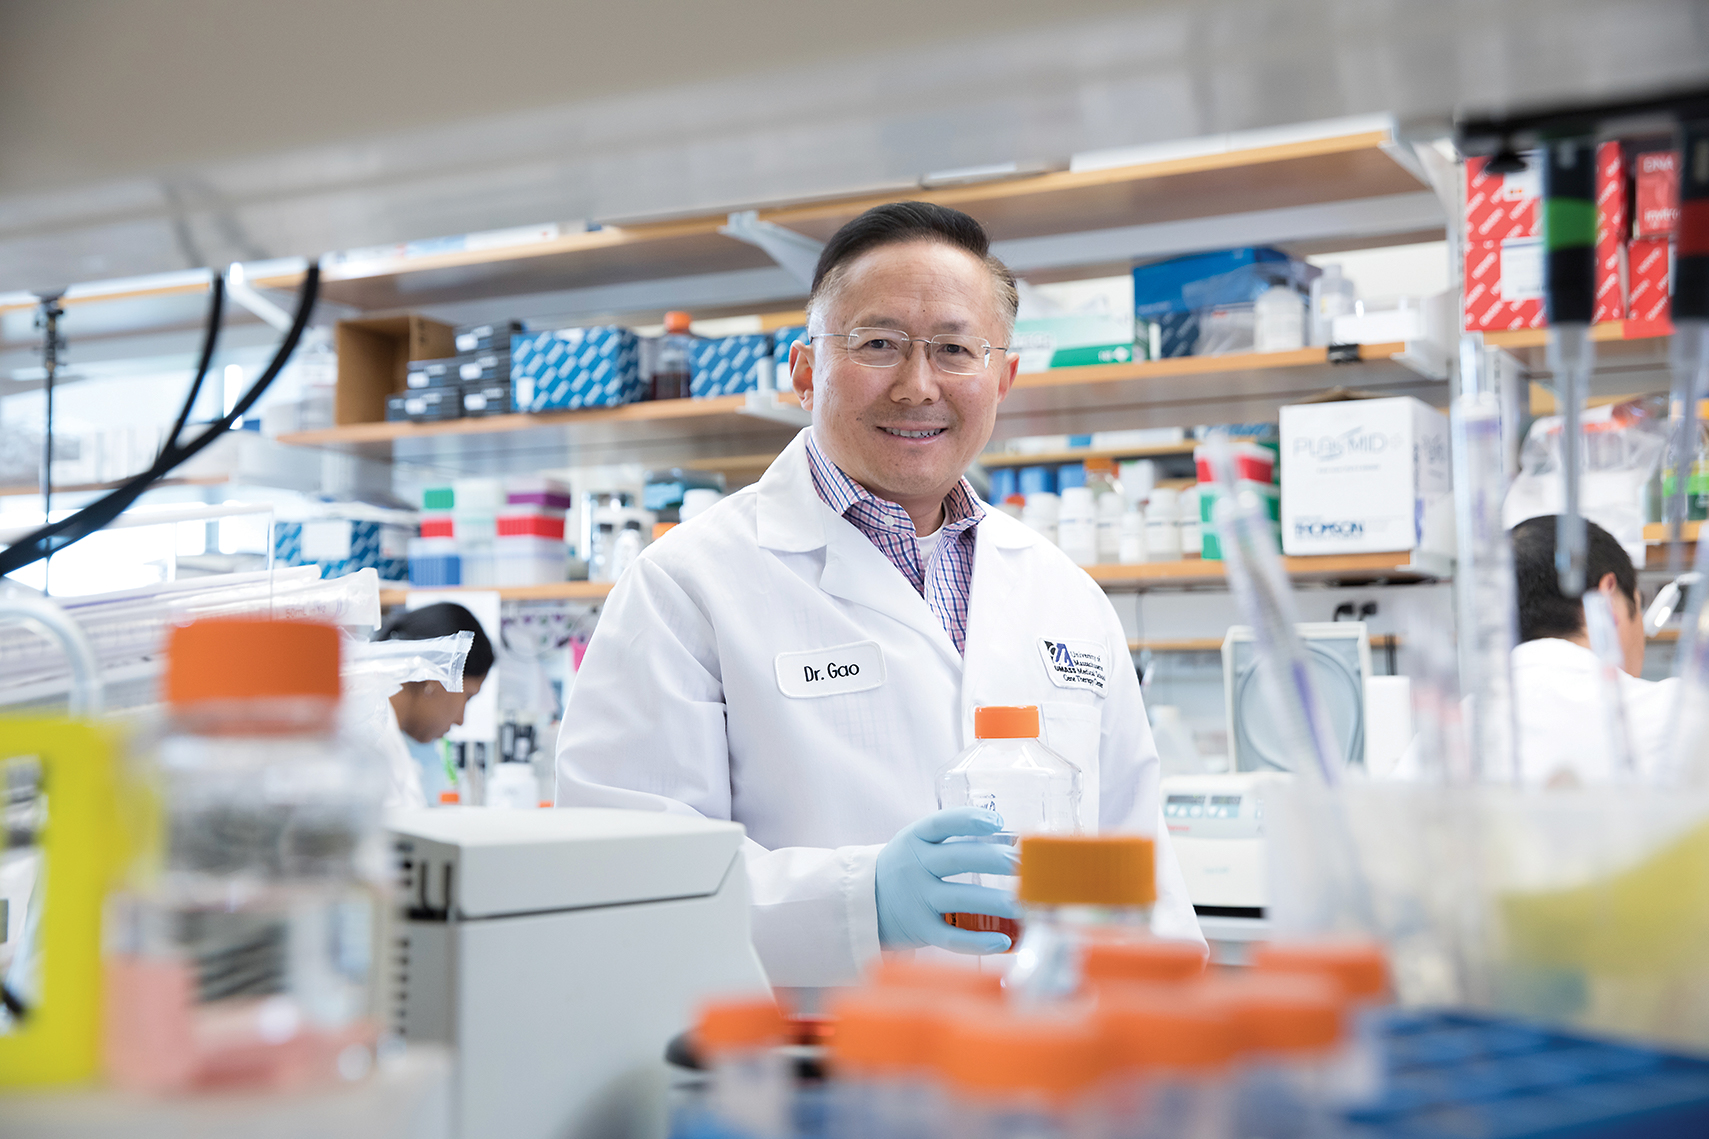 UMass Medical School microbiologist Guangping Gao